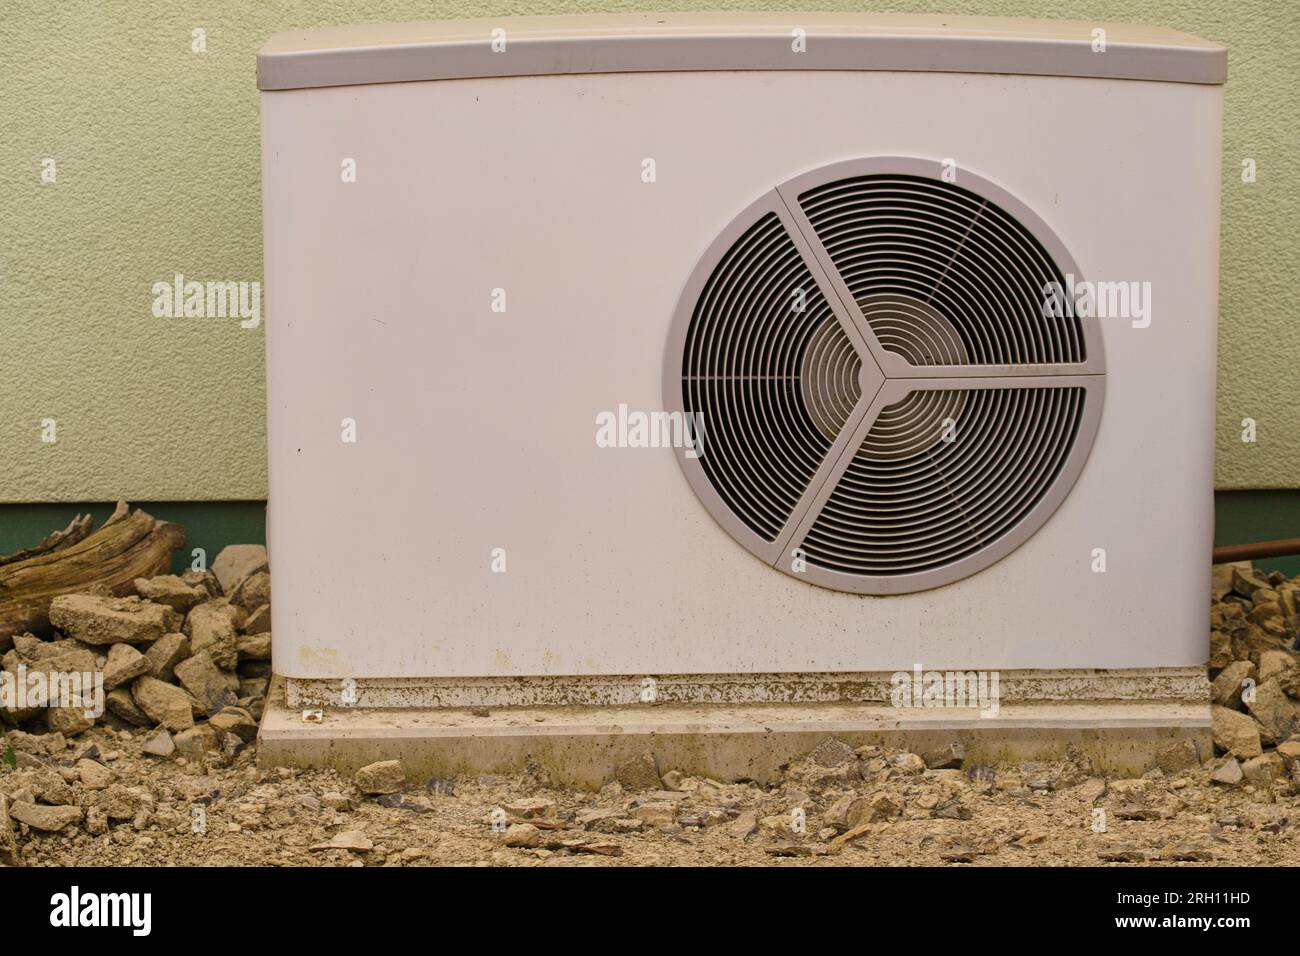 Wärmepumpe a Betrieb - Heizungssystem der Zukunft? Foto Stock